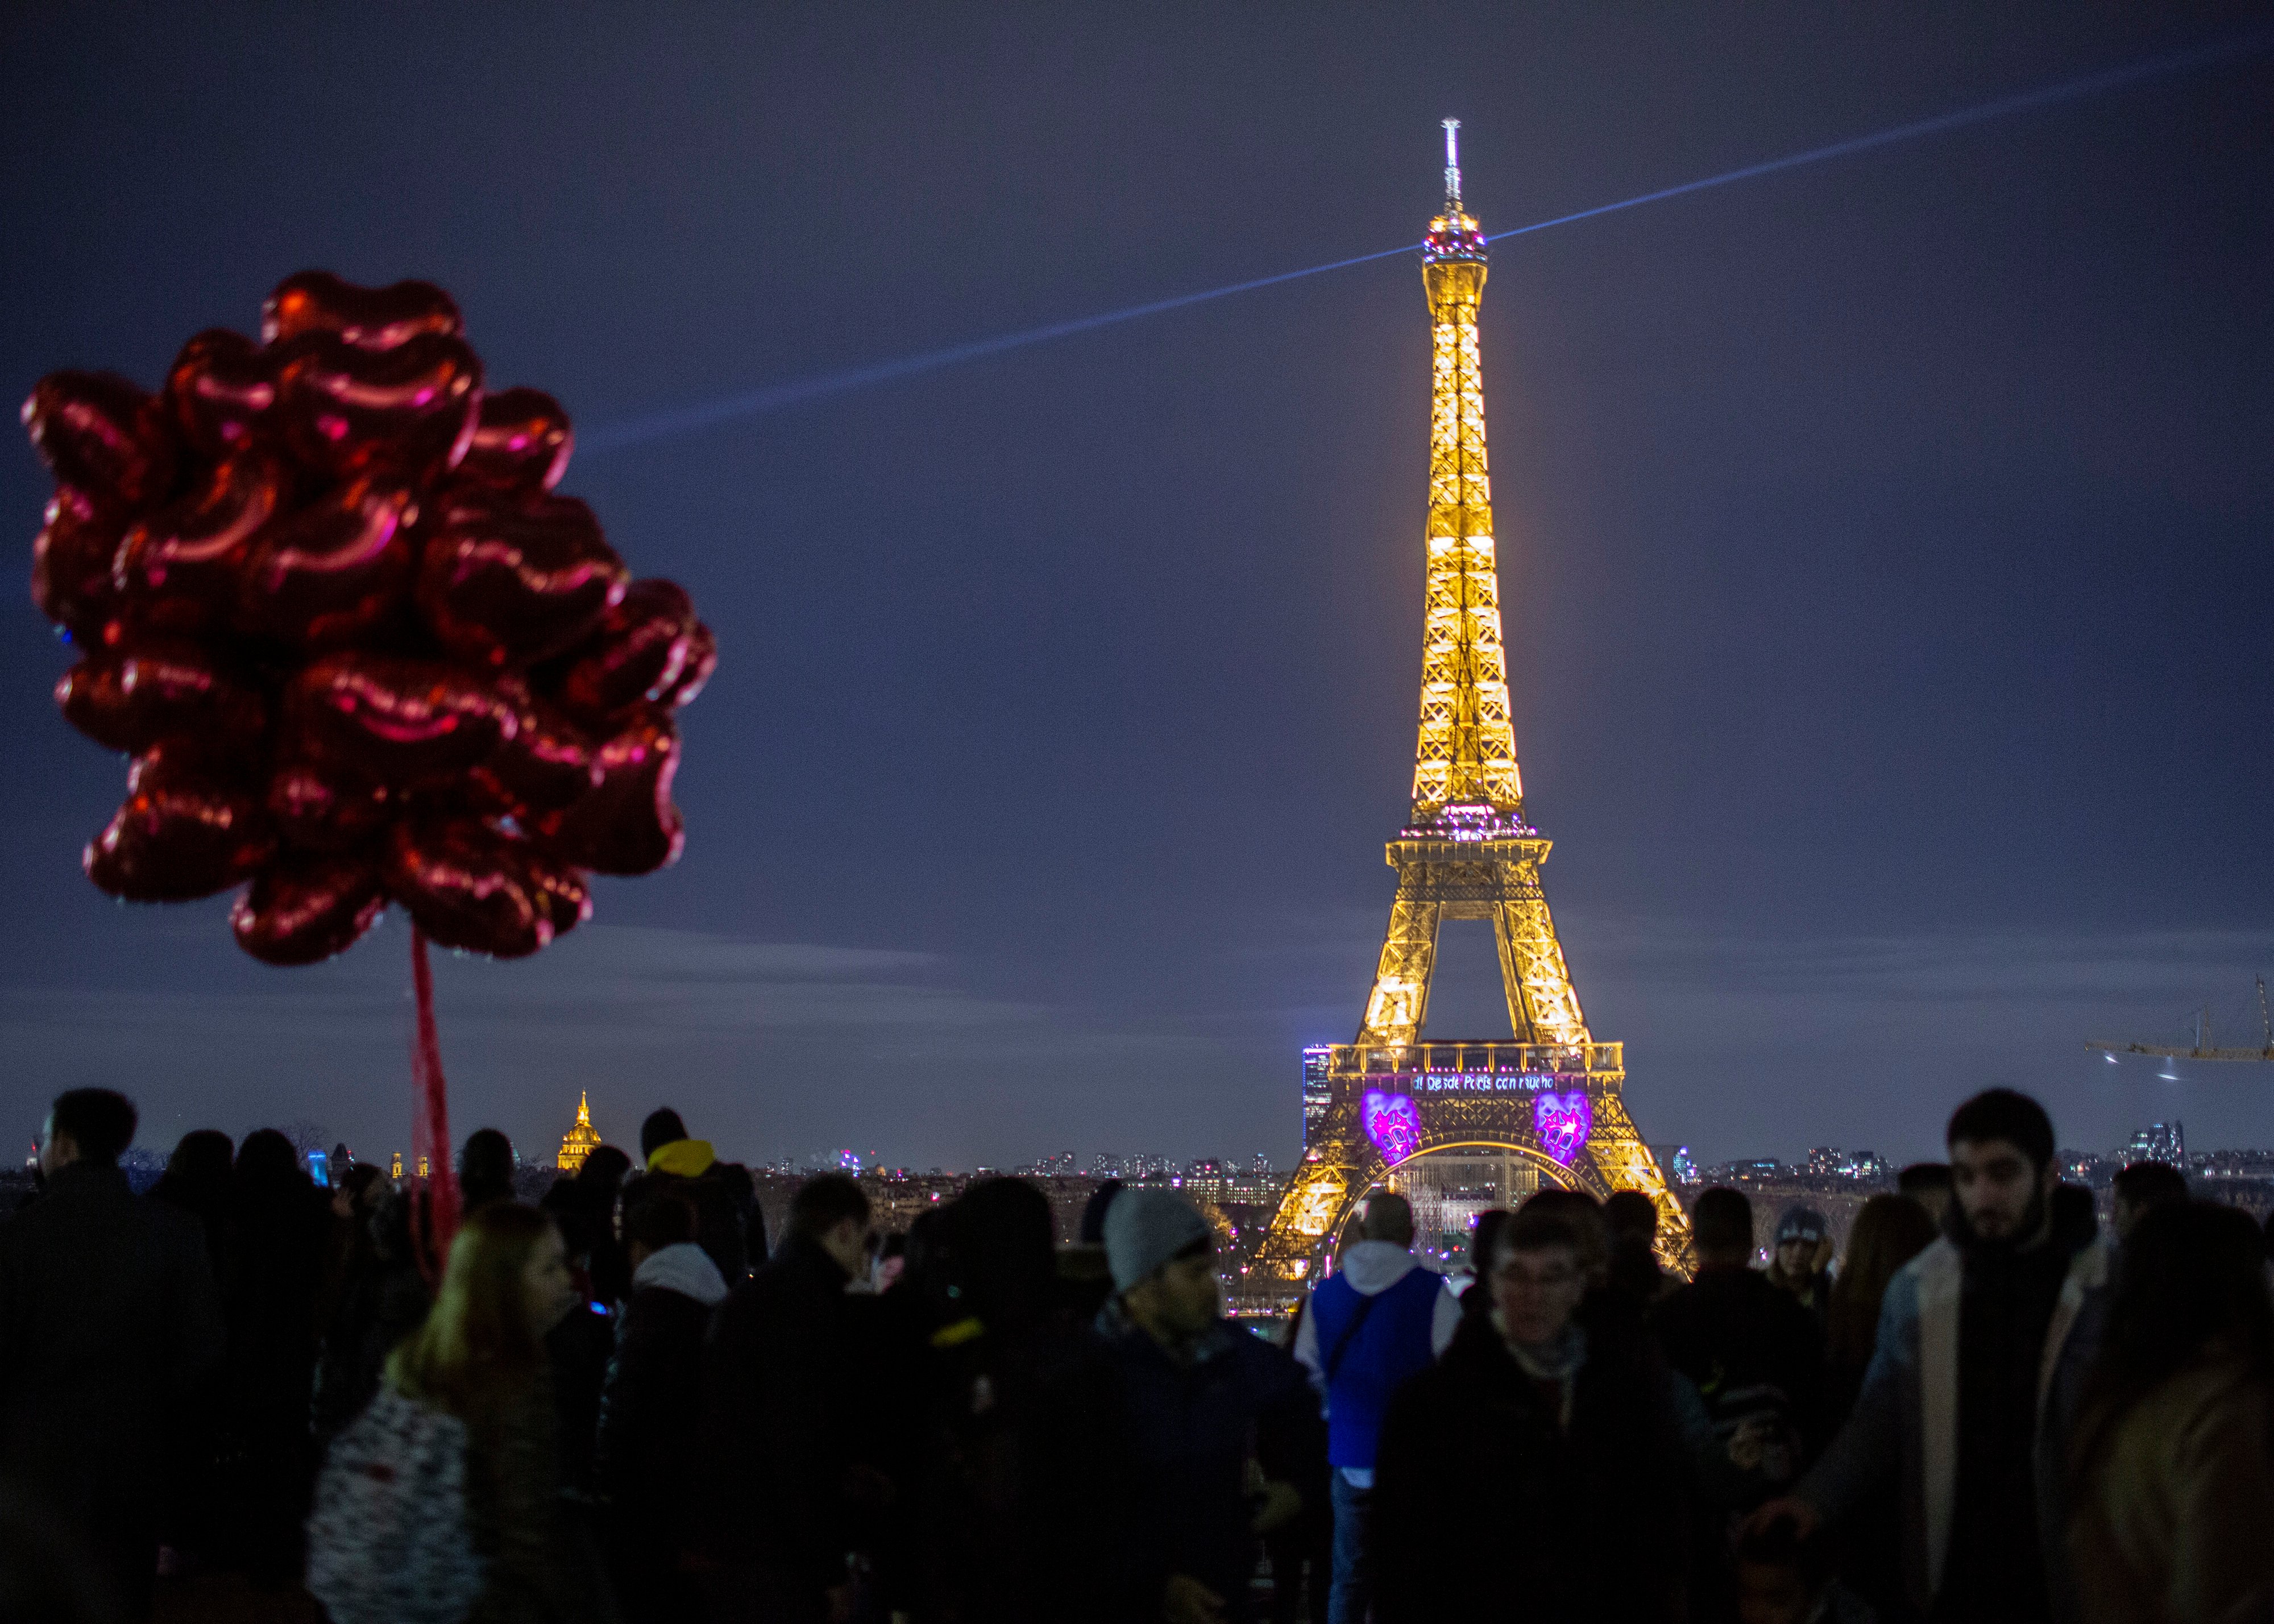 A light show illuminates the Eiffel Tower to mark Valentine